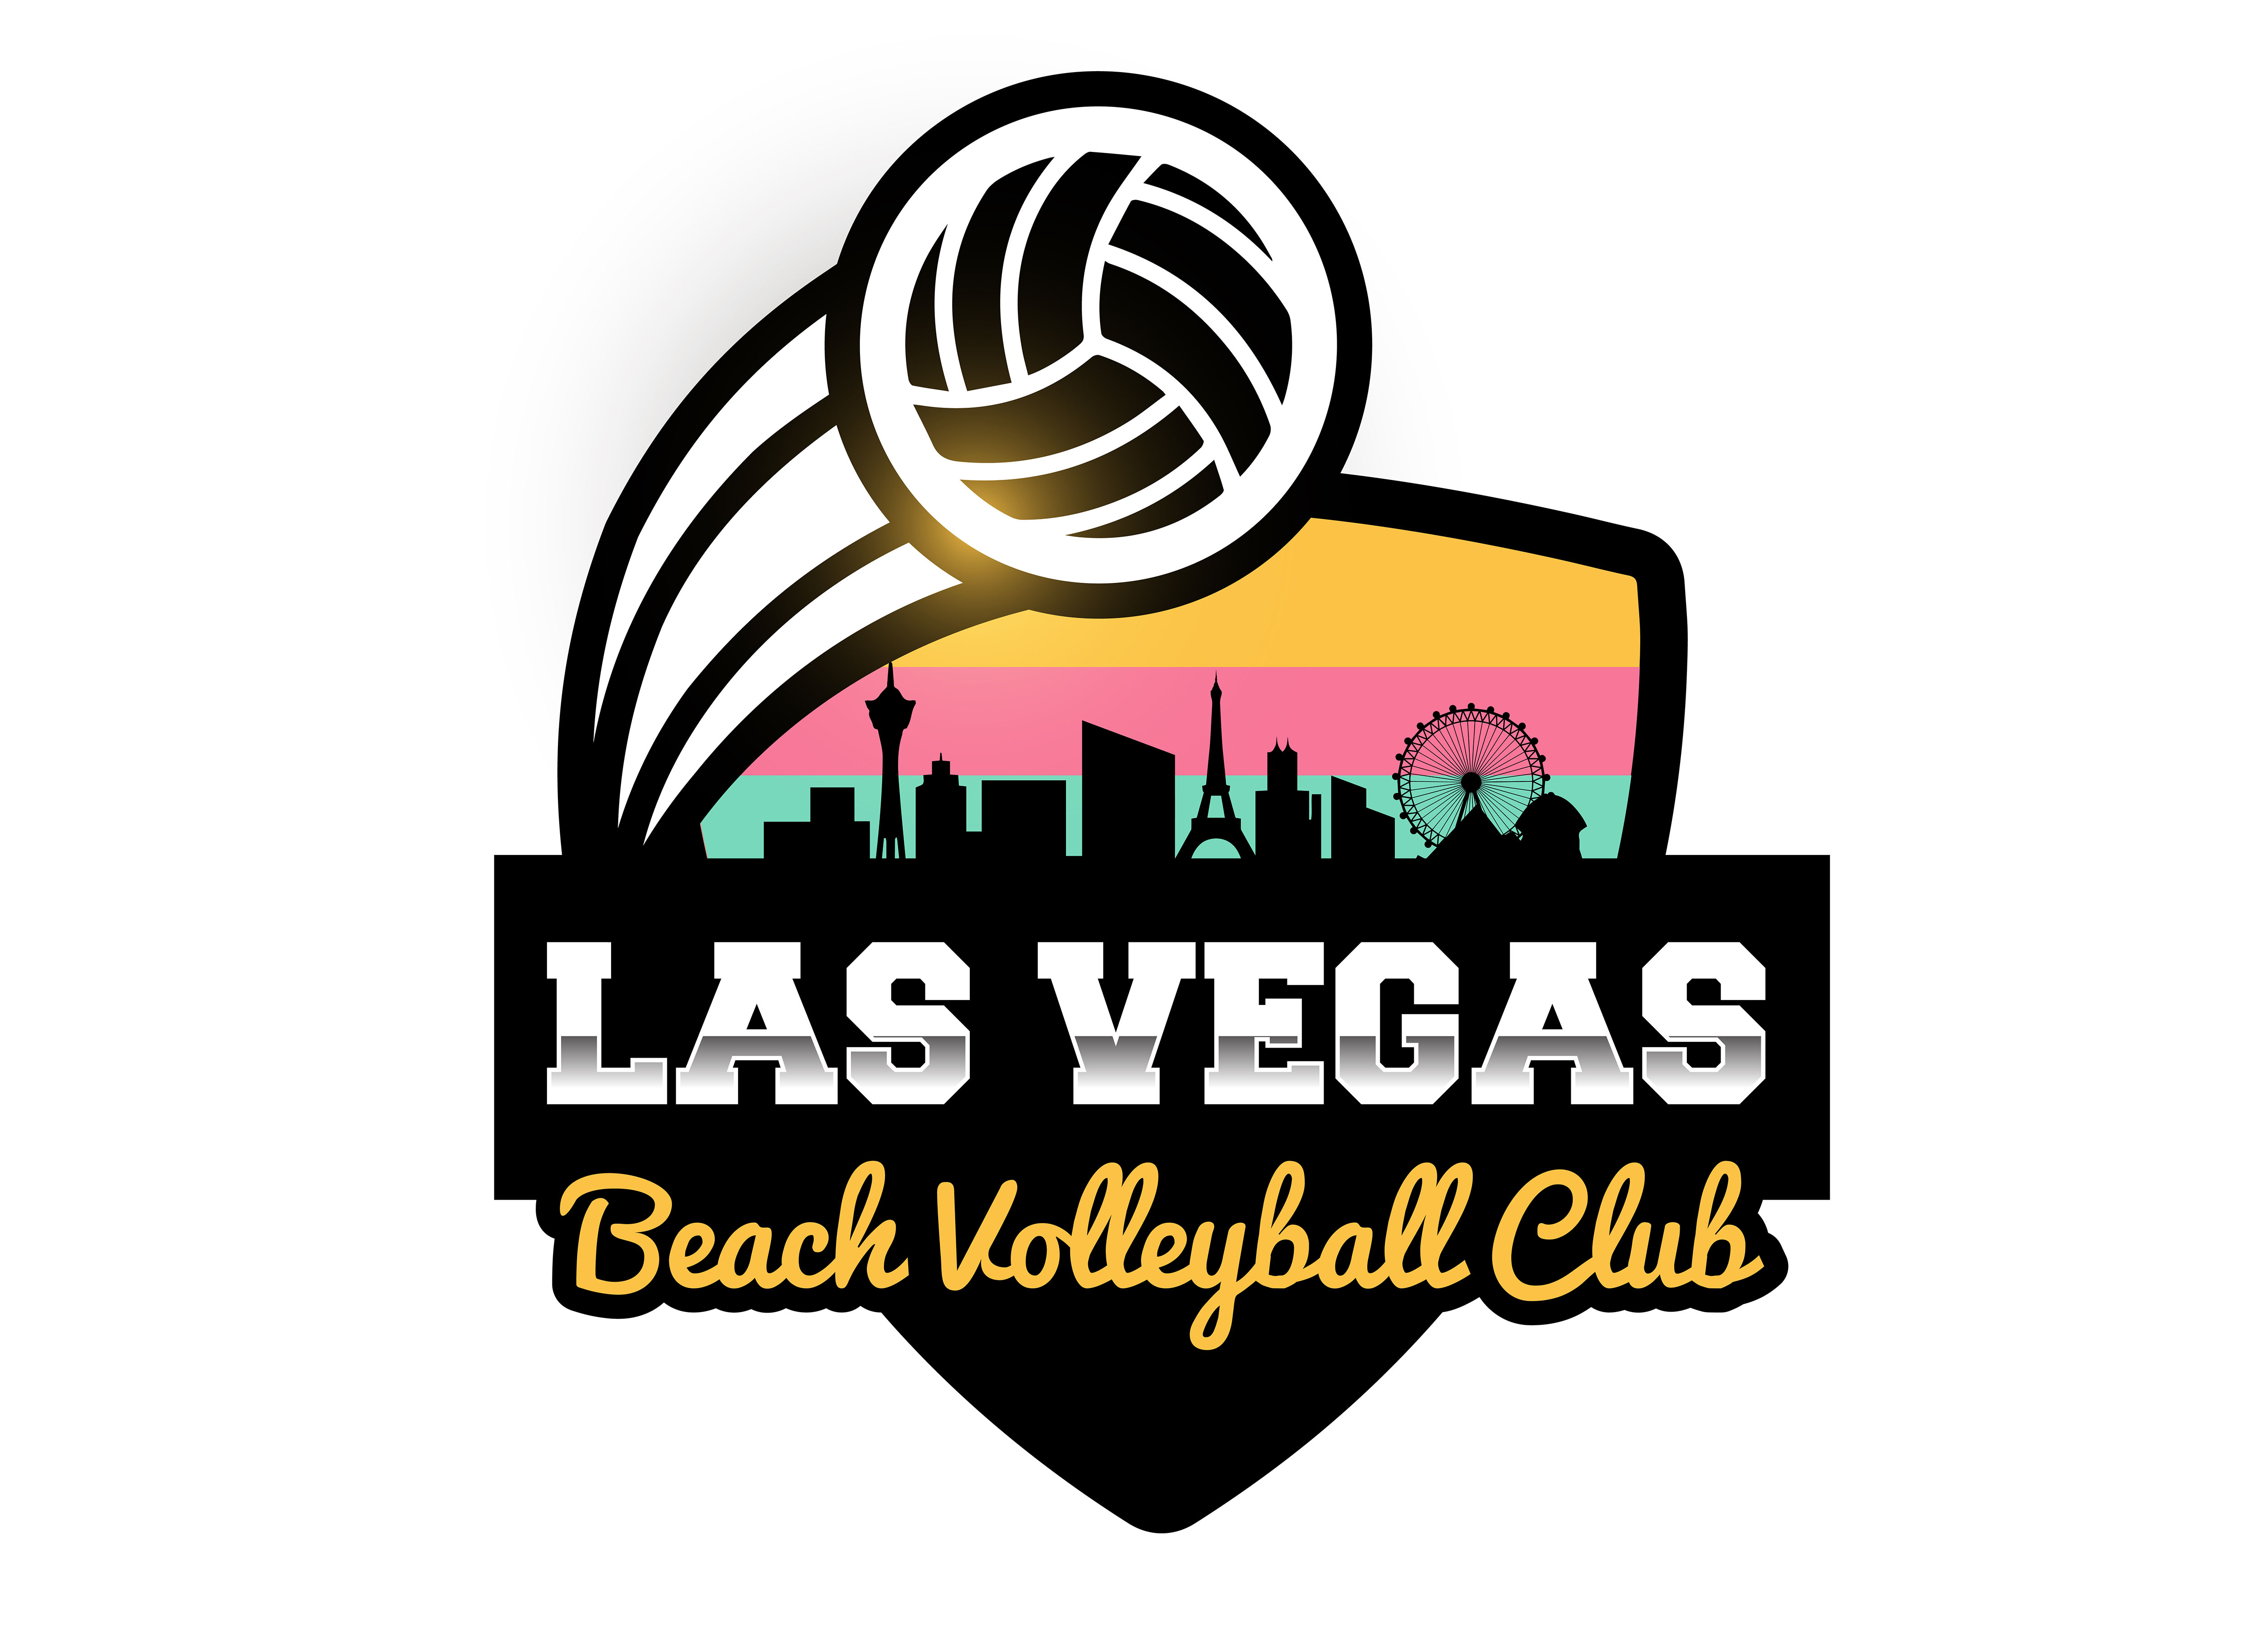 Las Vegas Beach Volleyball Club